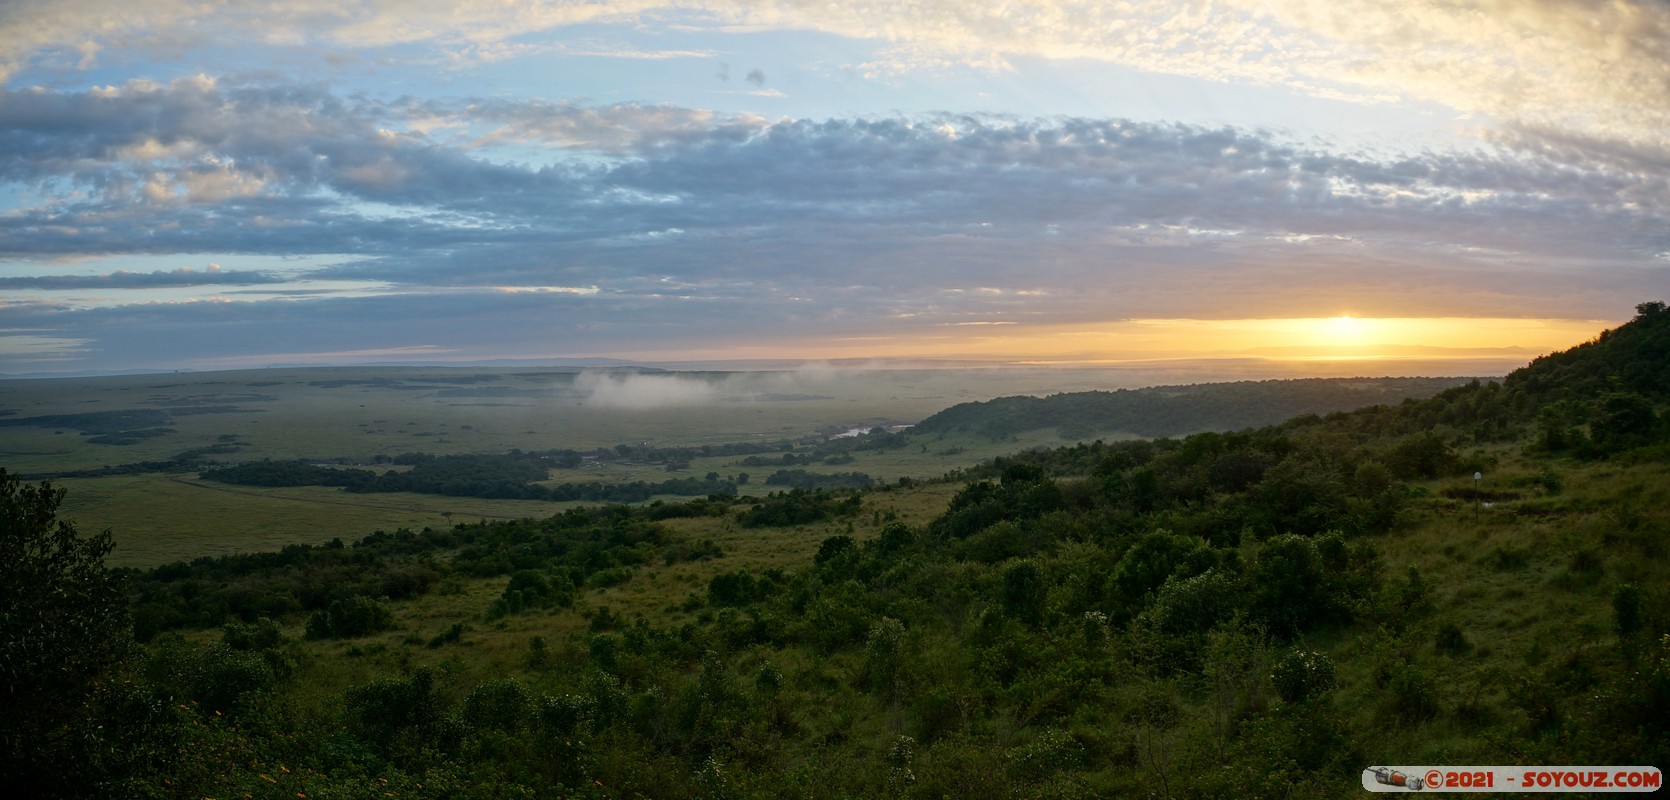 Masai Mara - Sunrise - panorama
Mots-clés: geo:lat=-1.40120349 geo:lon=35.02635828 geotagged KEN Kenya Narok Ol Kiombo paysage sunset Lumiere panorama